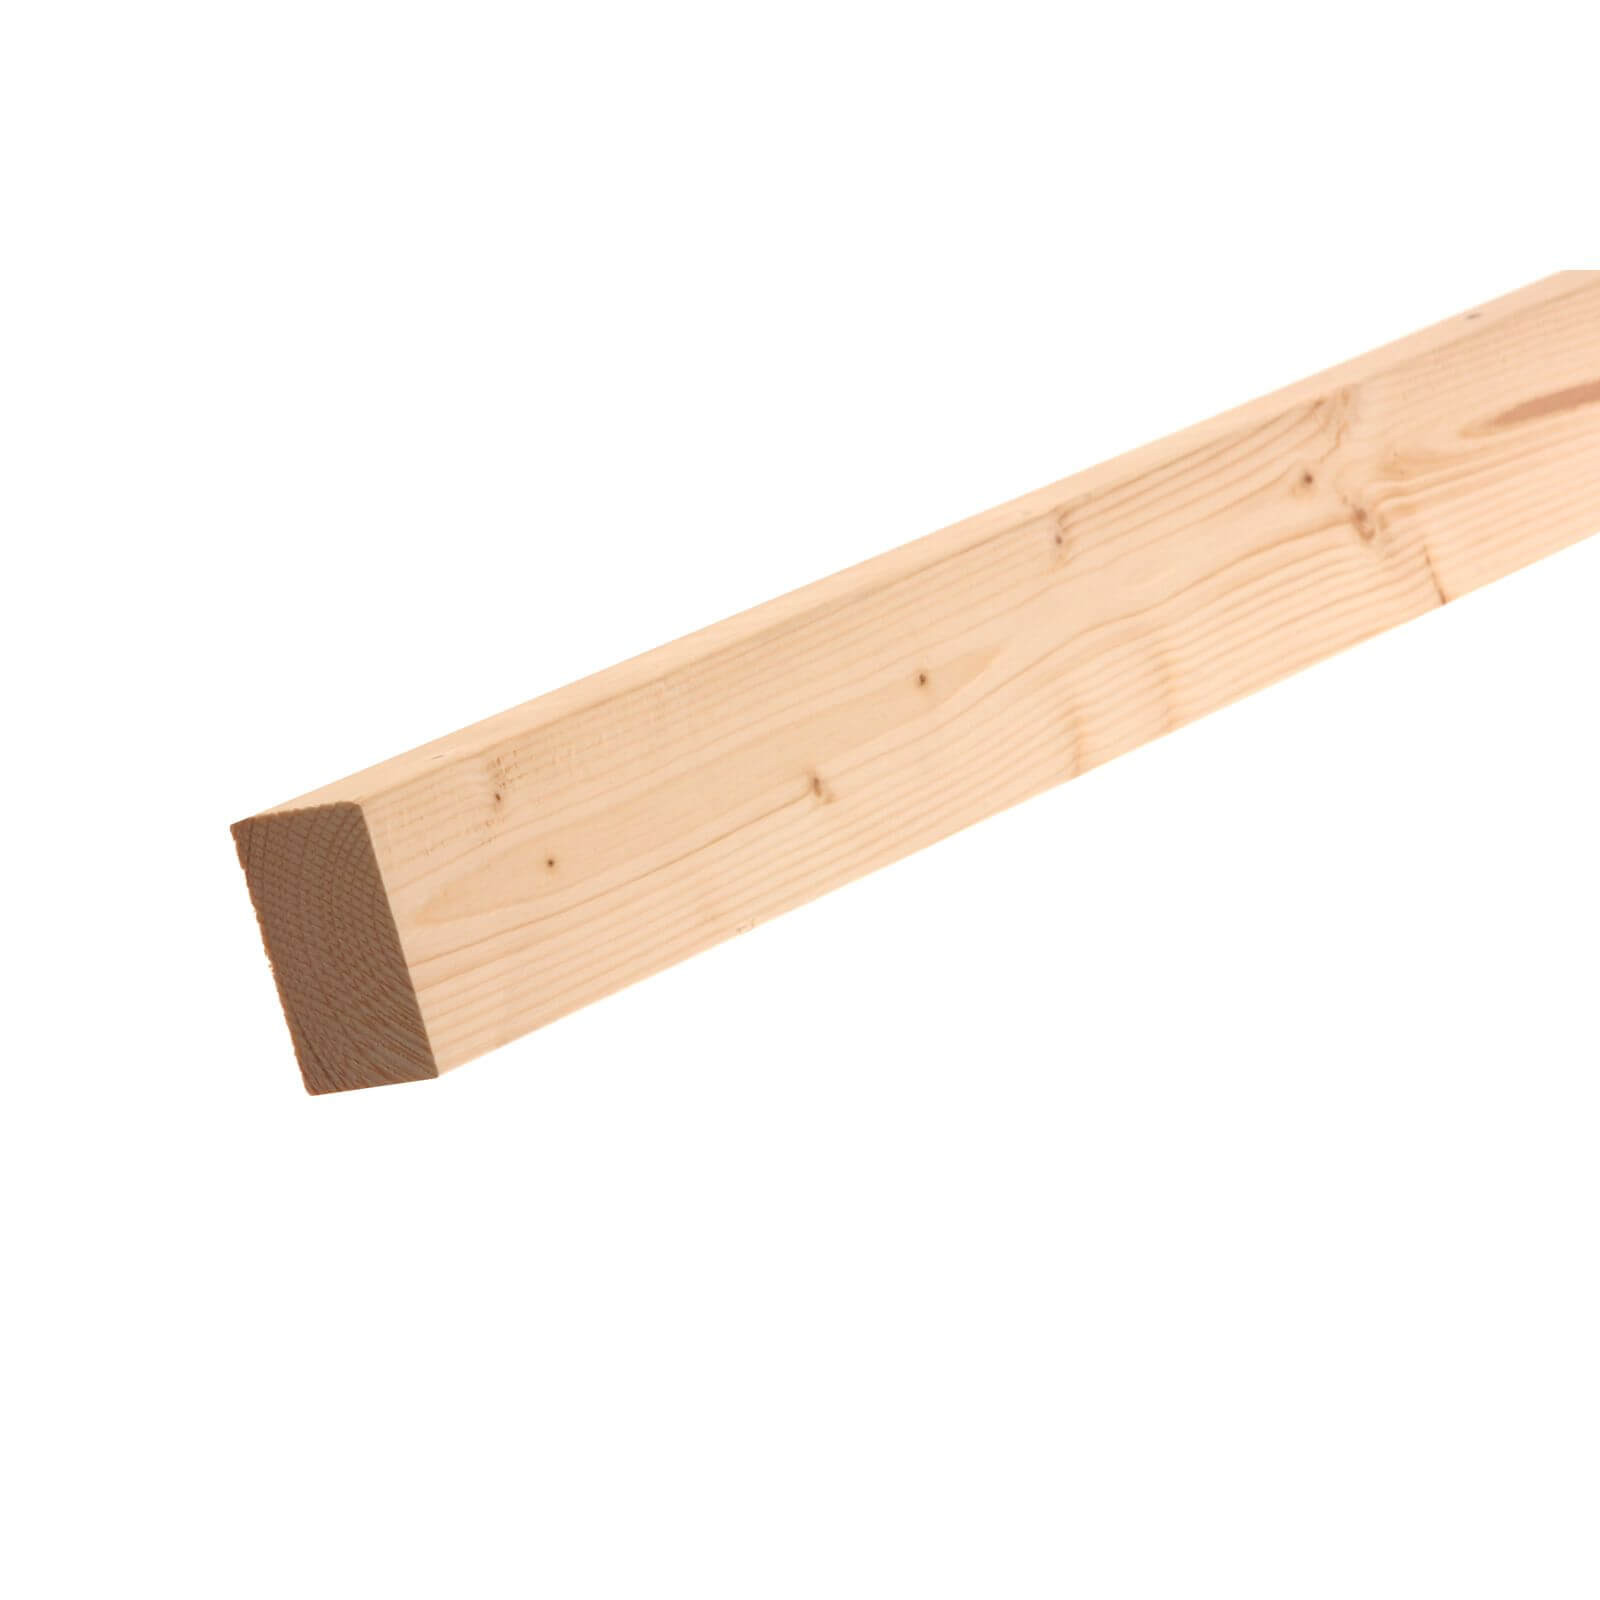 Photo of Metsa Cls Internal Studwork Whitewood Stick Timber 2.4m -38mm X 63mm X 2400mm-